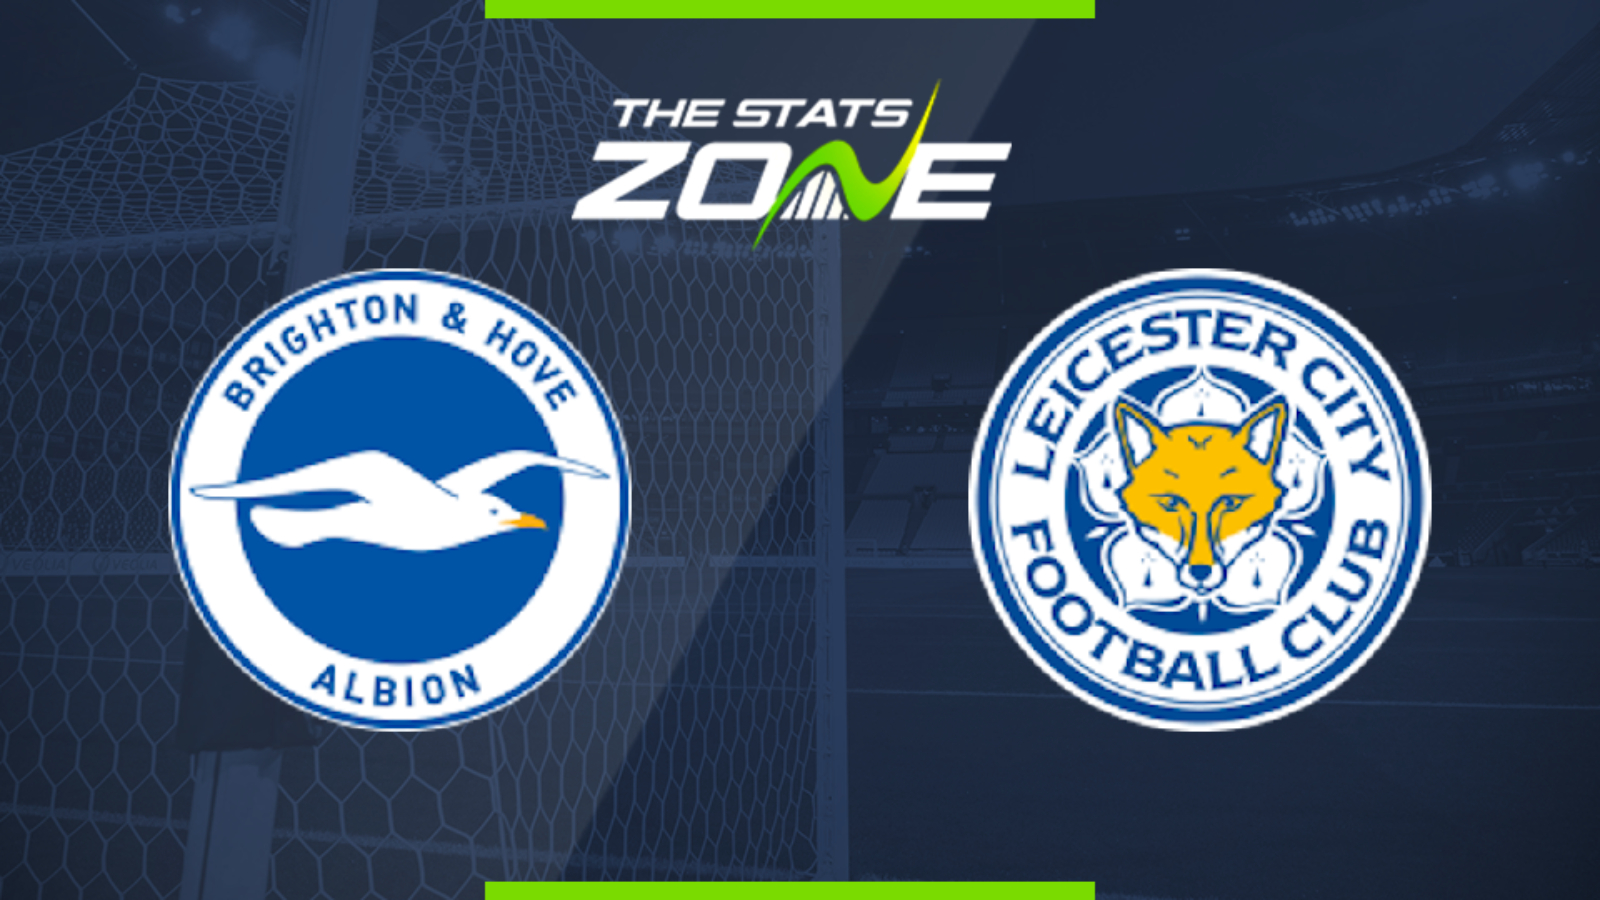 2019 20 Premier League Brighton Vs Leicester Preview Prediction The Stats Zone